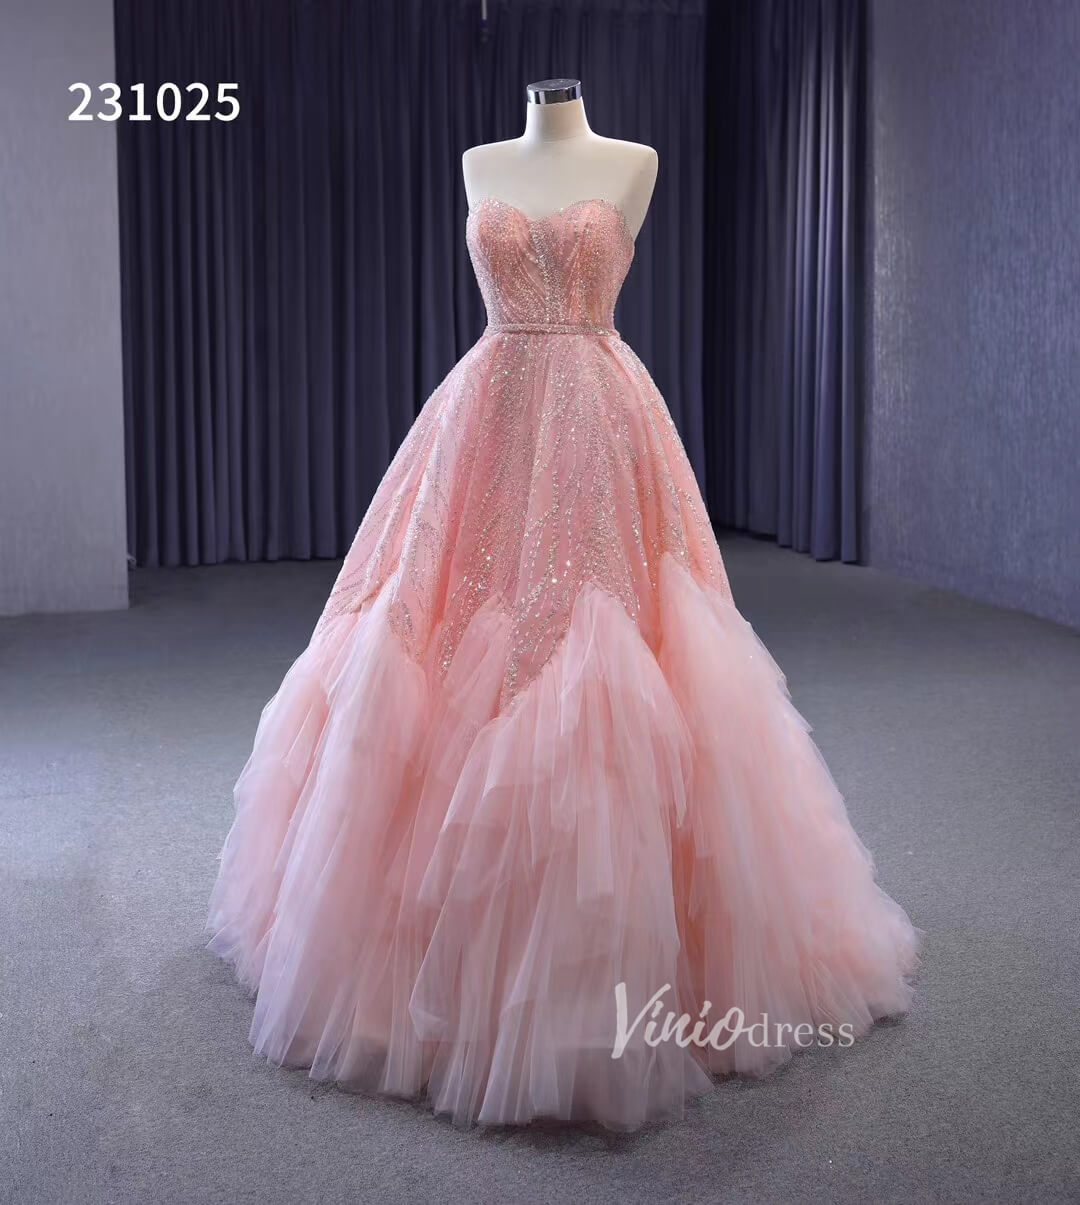 strapless pink dress